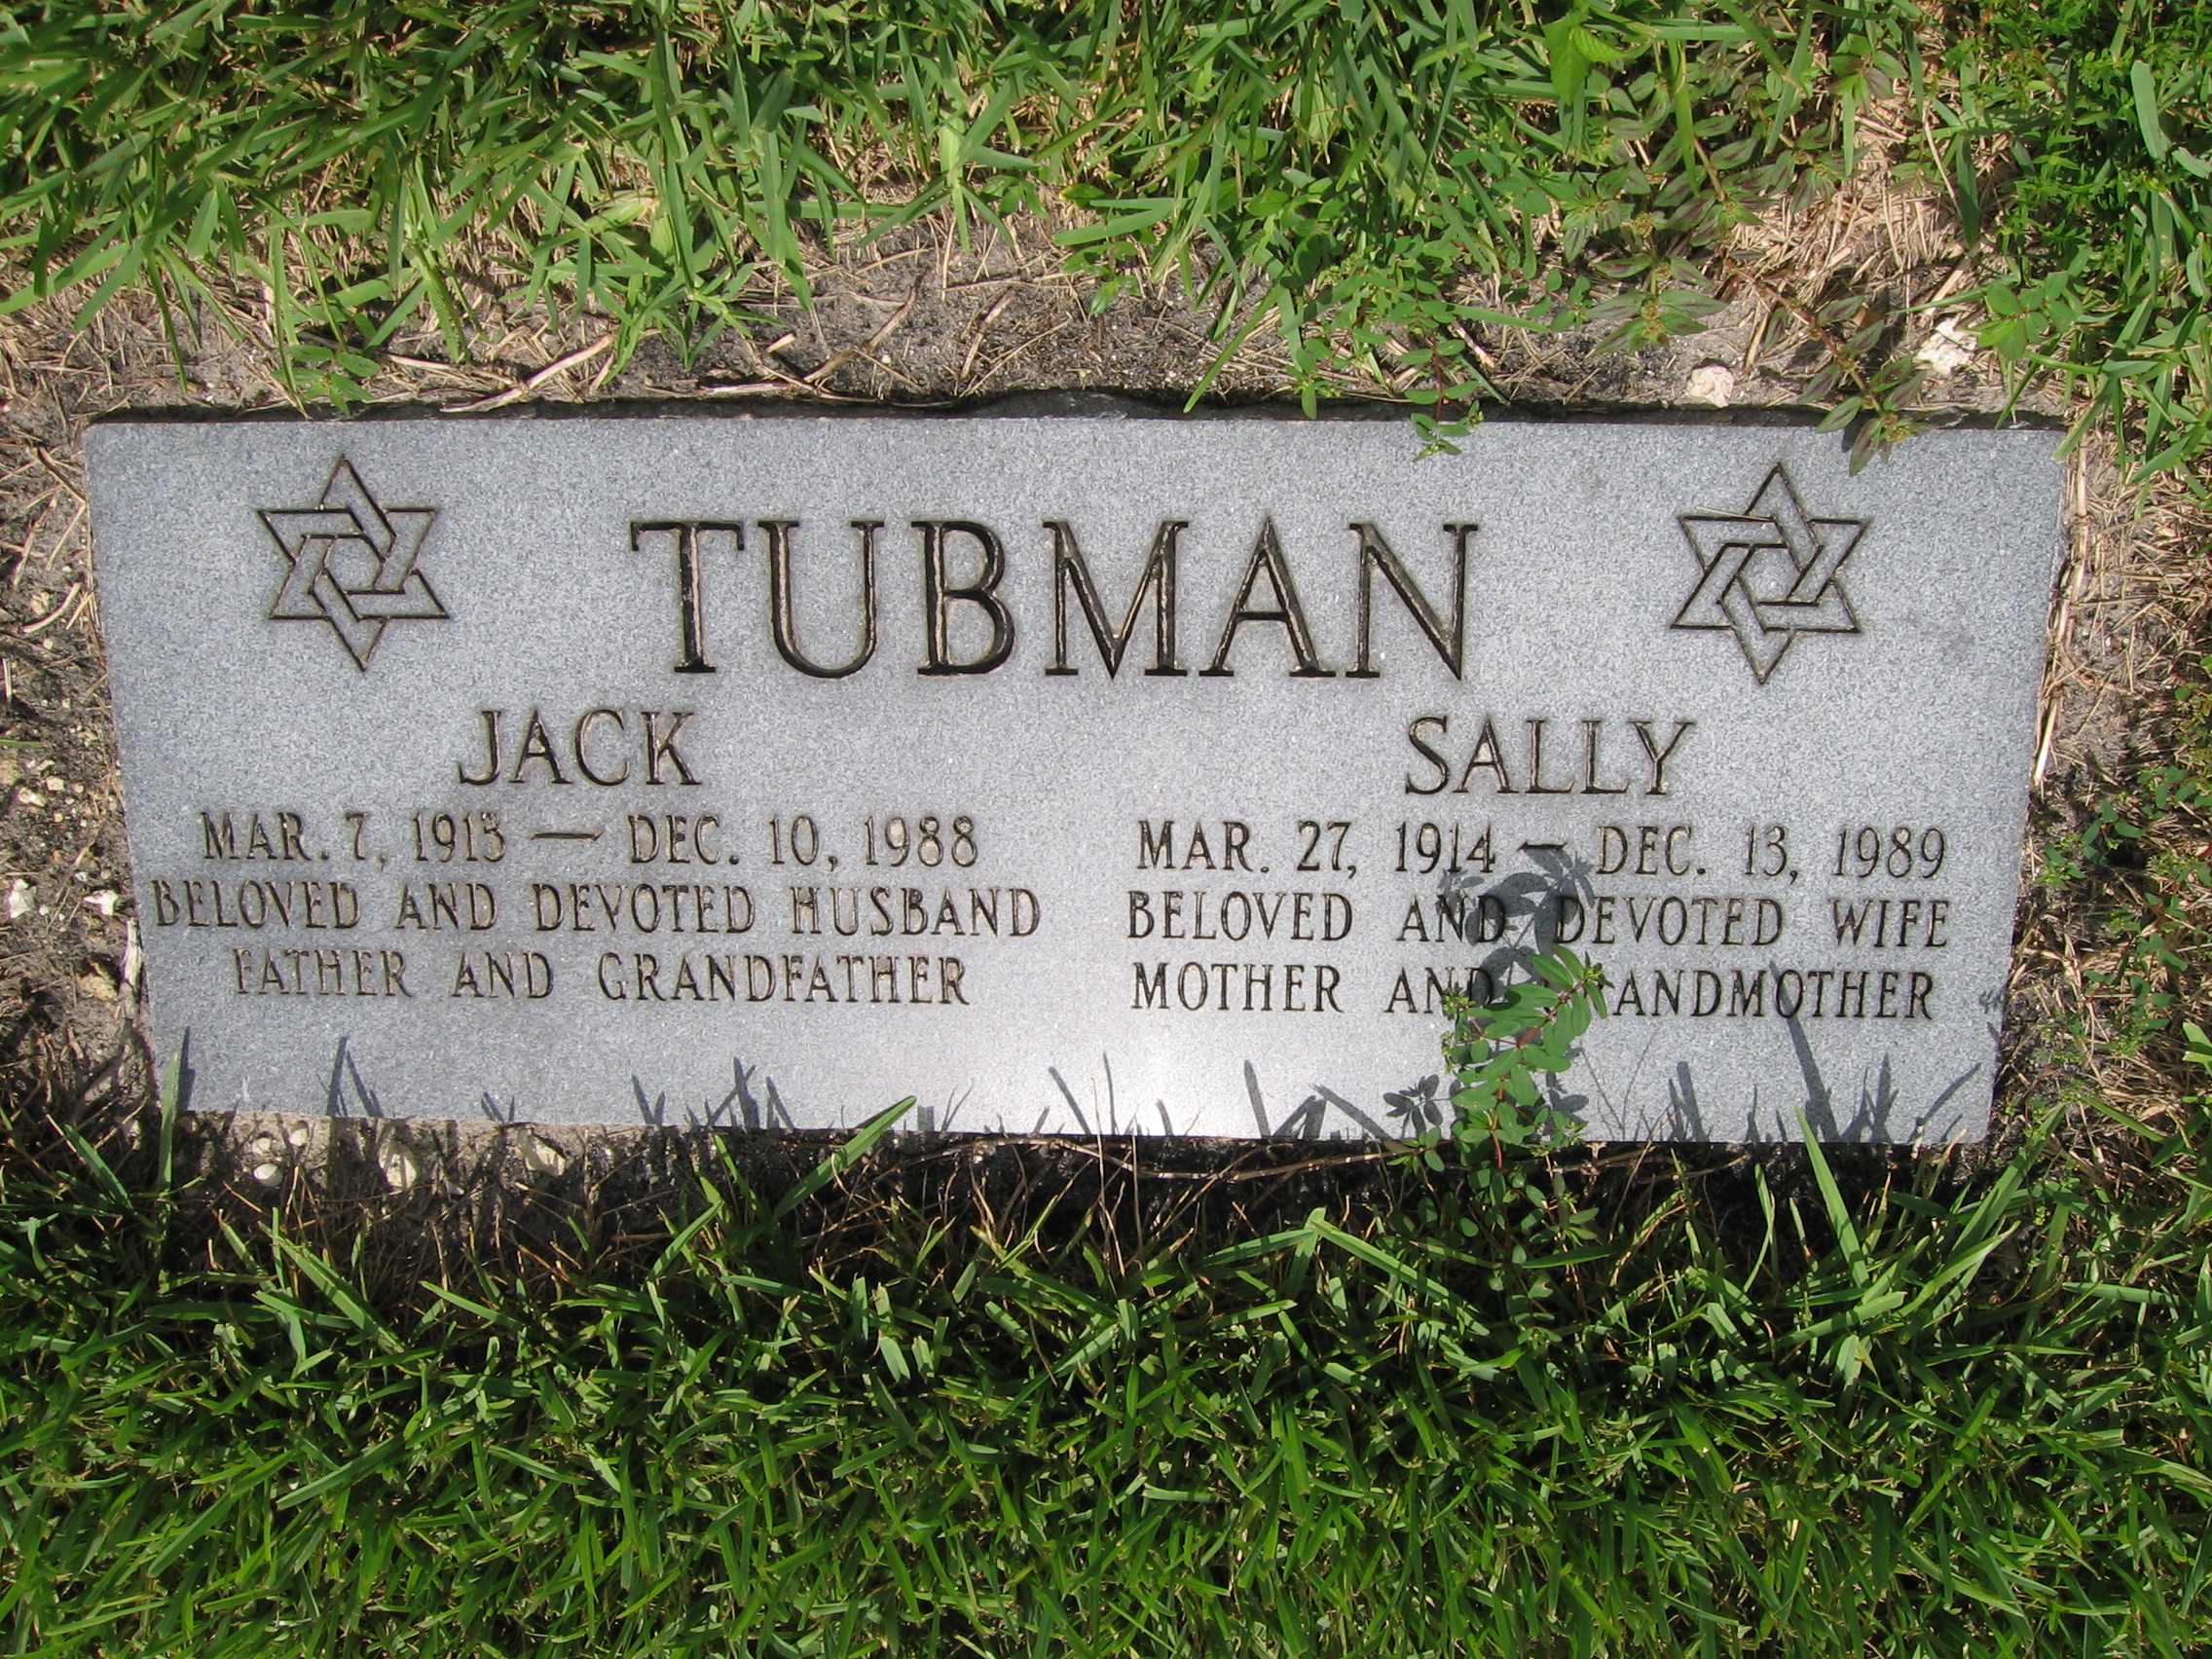 Jack Tubman